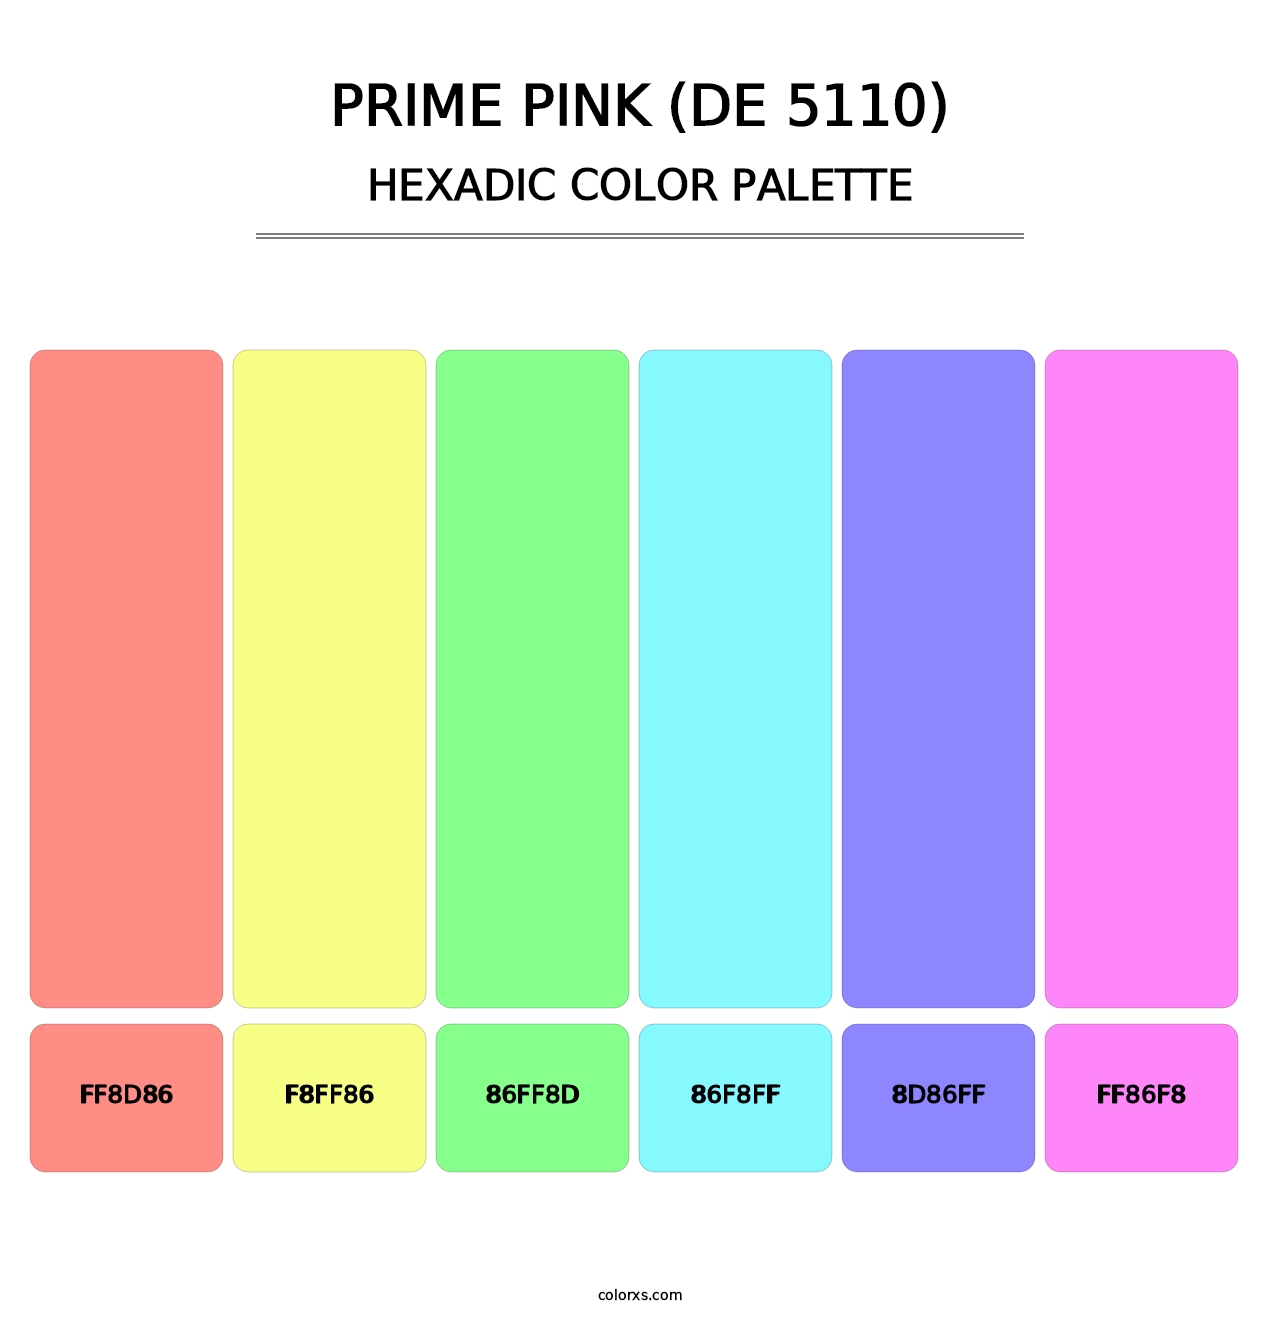 Prime Pink (DE 5110) - Hexadic Color Palette